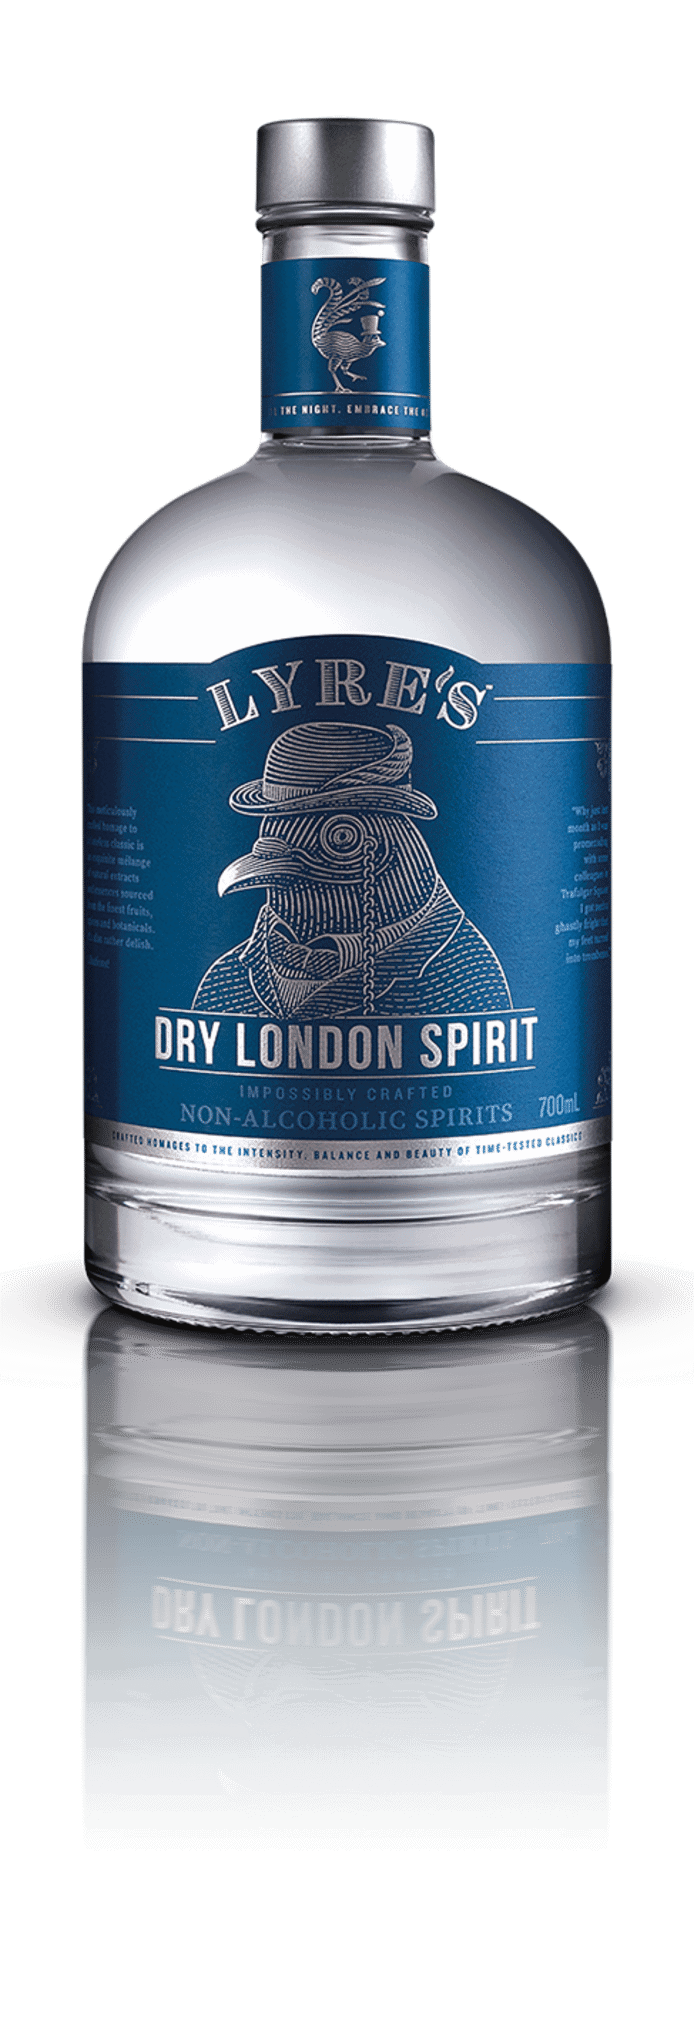 Lyre'S London Dry Spirit Alcoholvrij